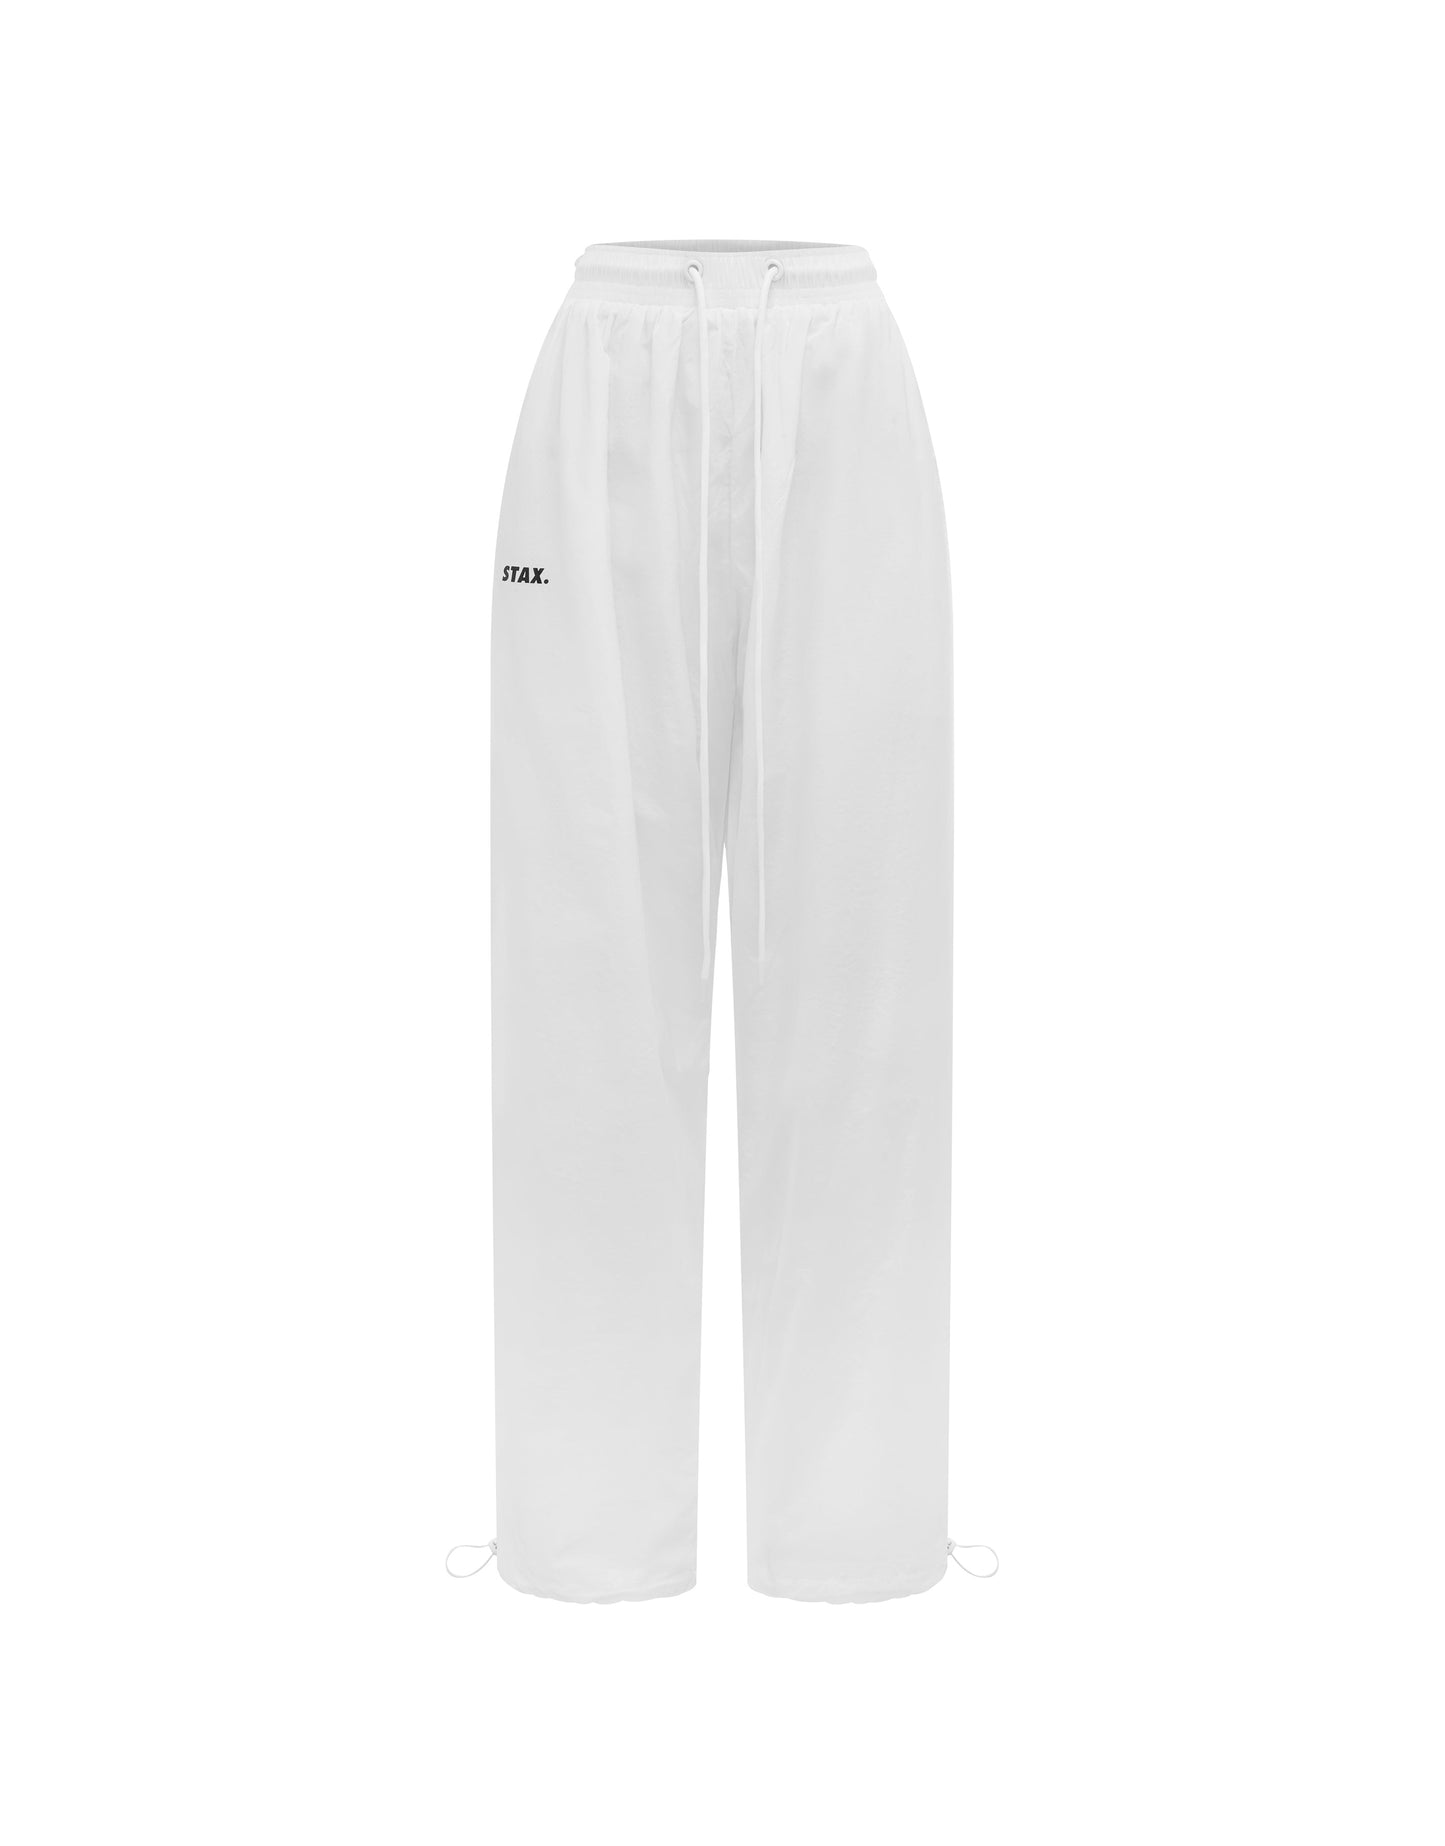 Parachute Pants- White